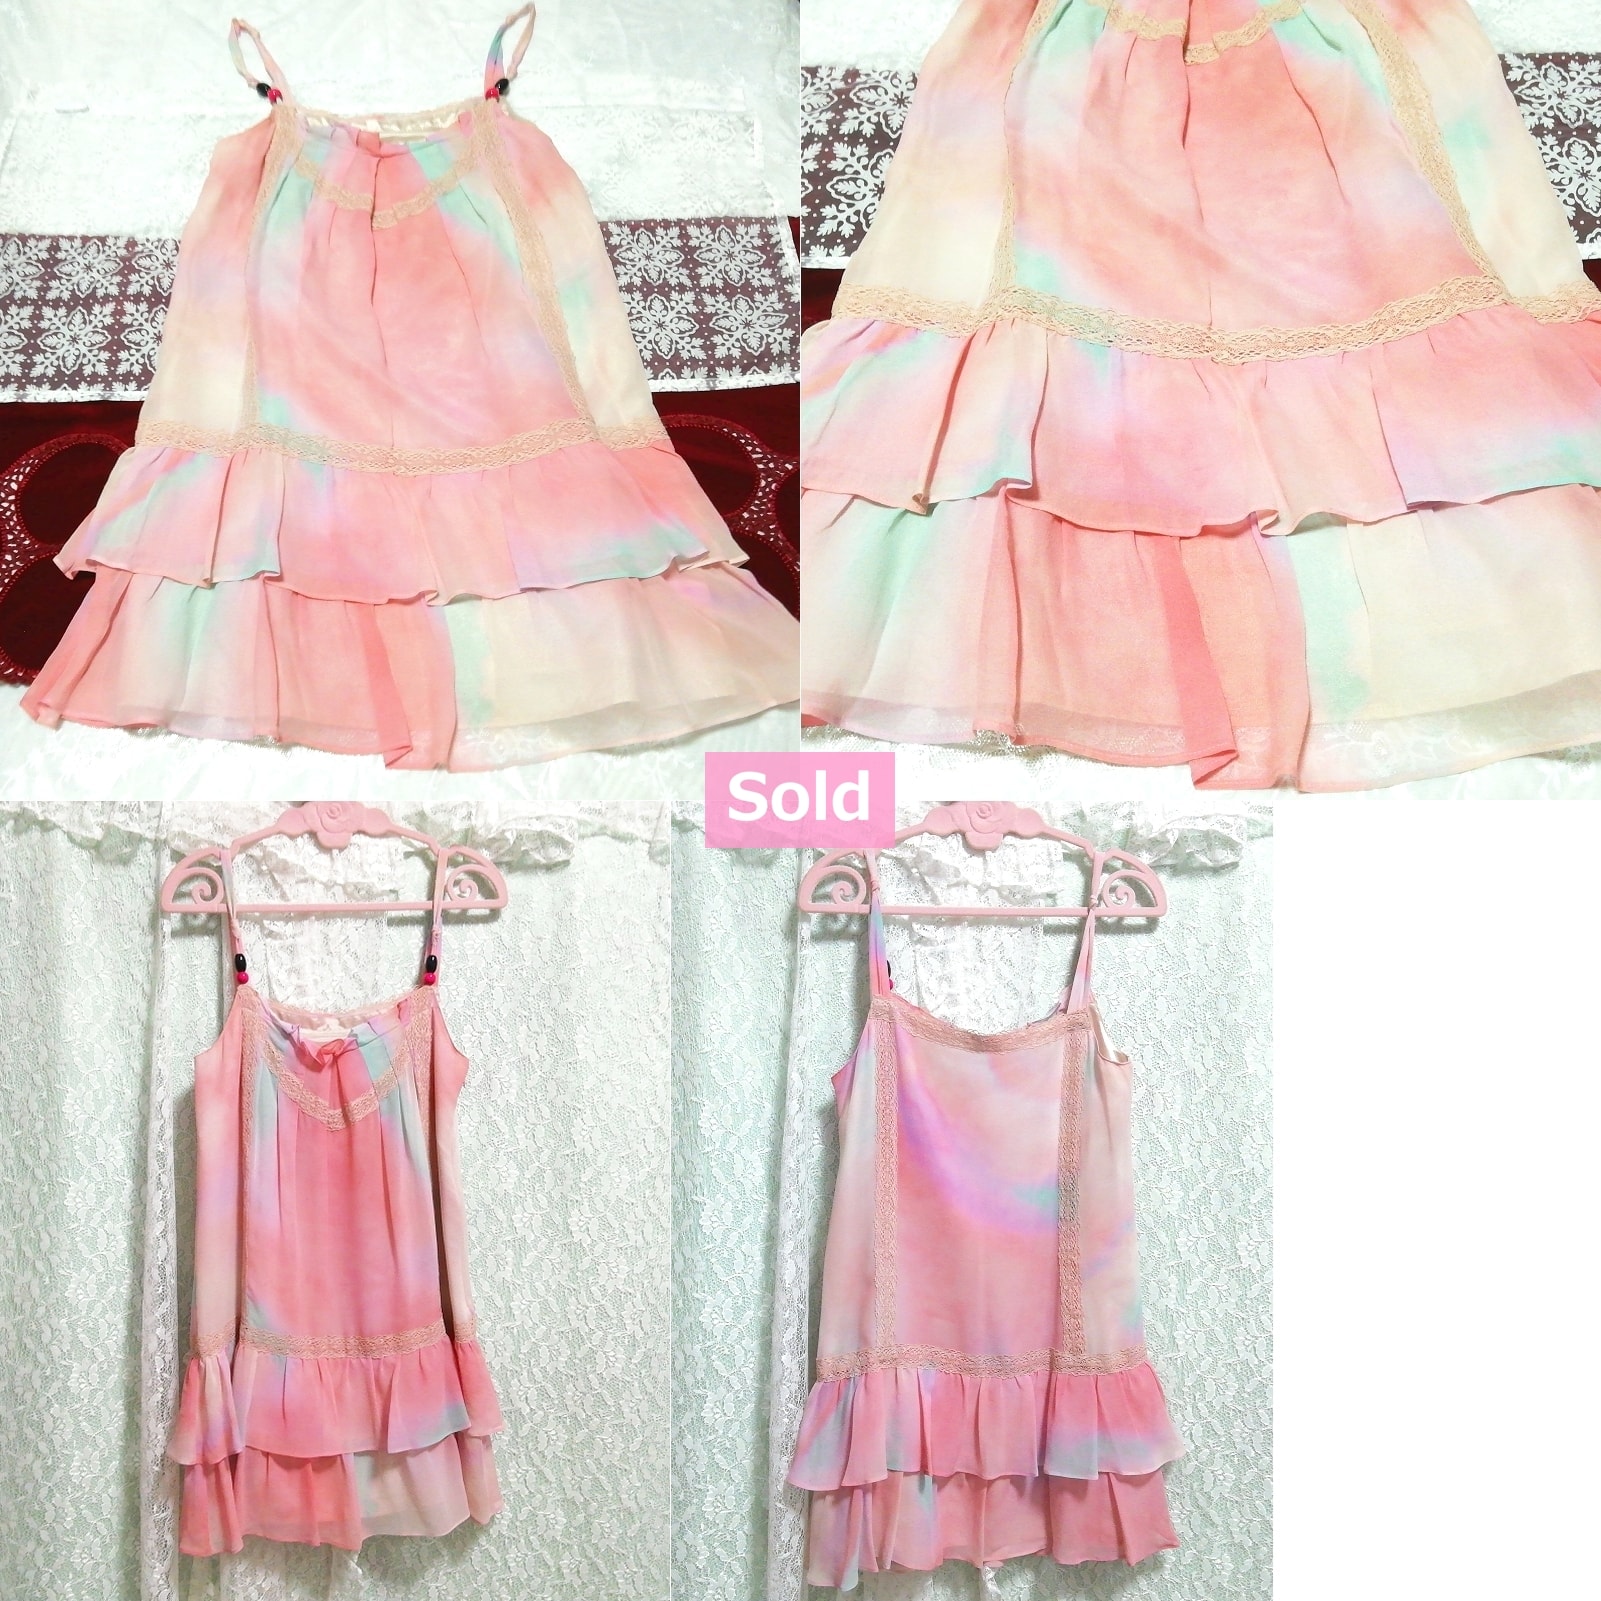 Silk silk pink chiffon negligee nightgown camisole dress babydoll dress, fashion, ladies' fashion, camisole